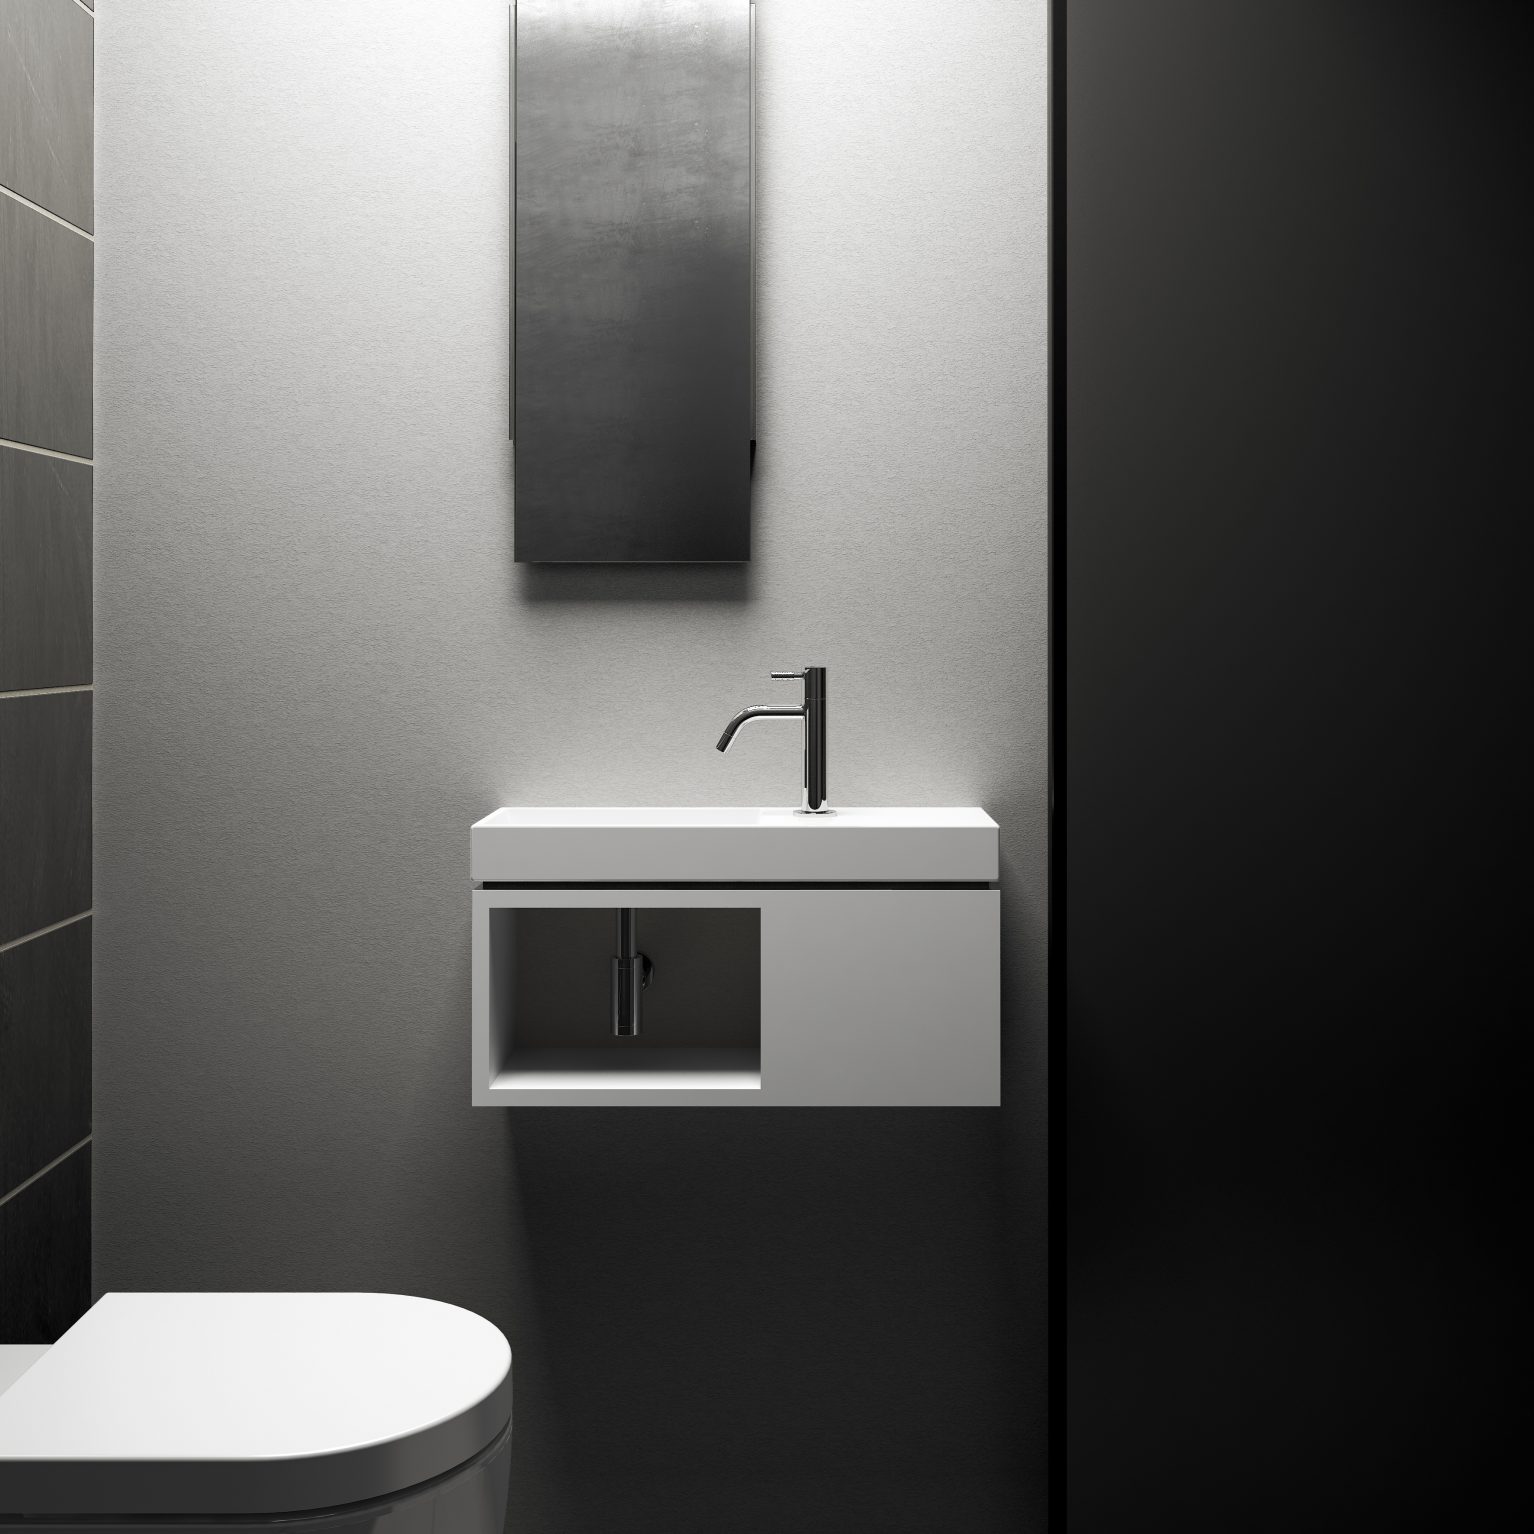 wastafel-kranen-chroom-toilet-badkamer-luxe-sanitair-Freddo-2-clou-CL060300129L-fontein-kraan